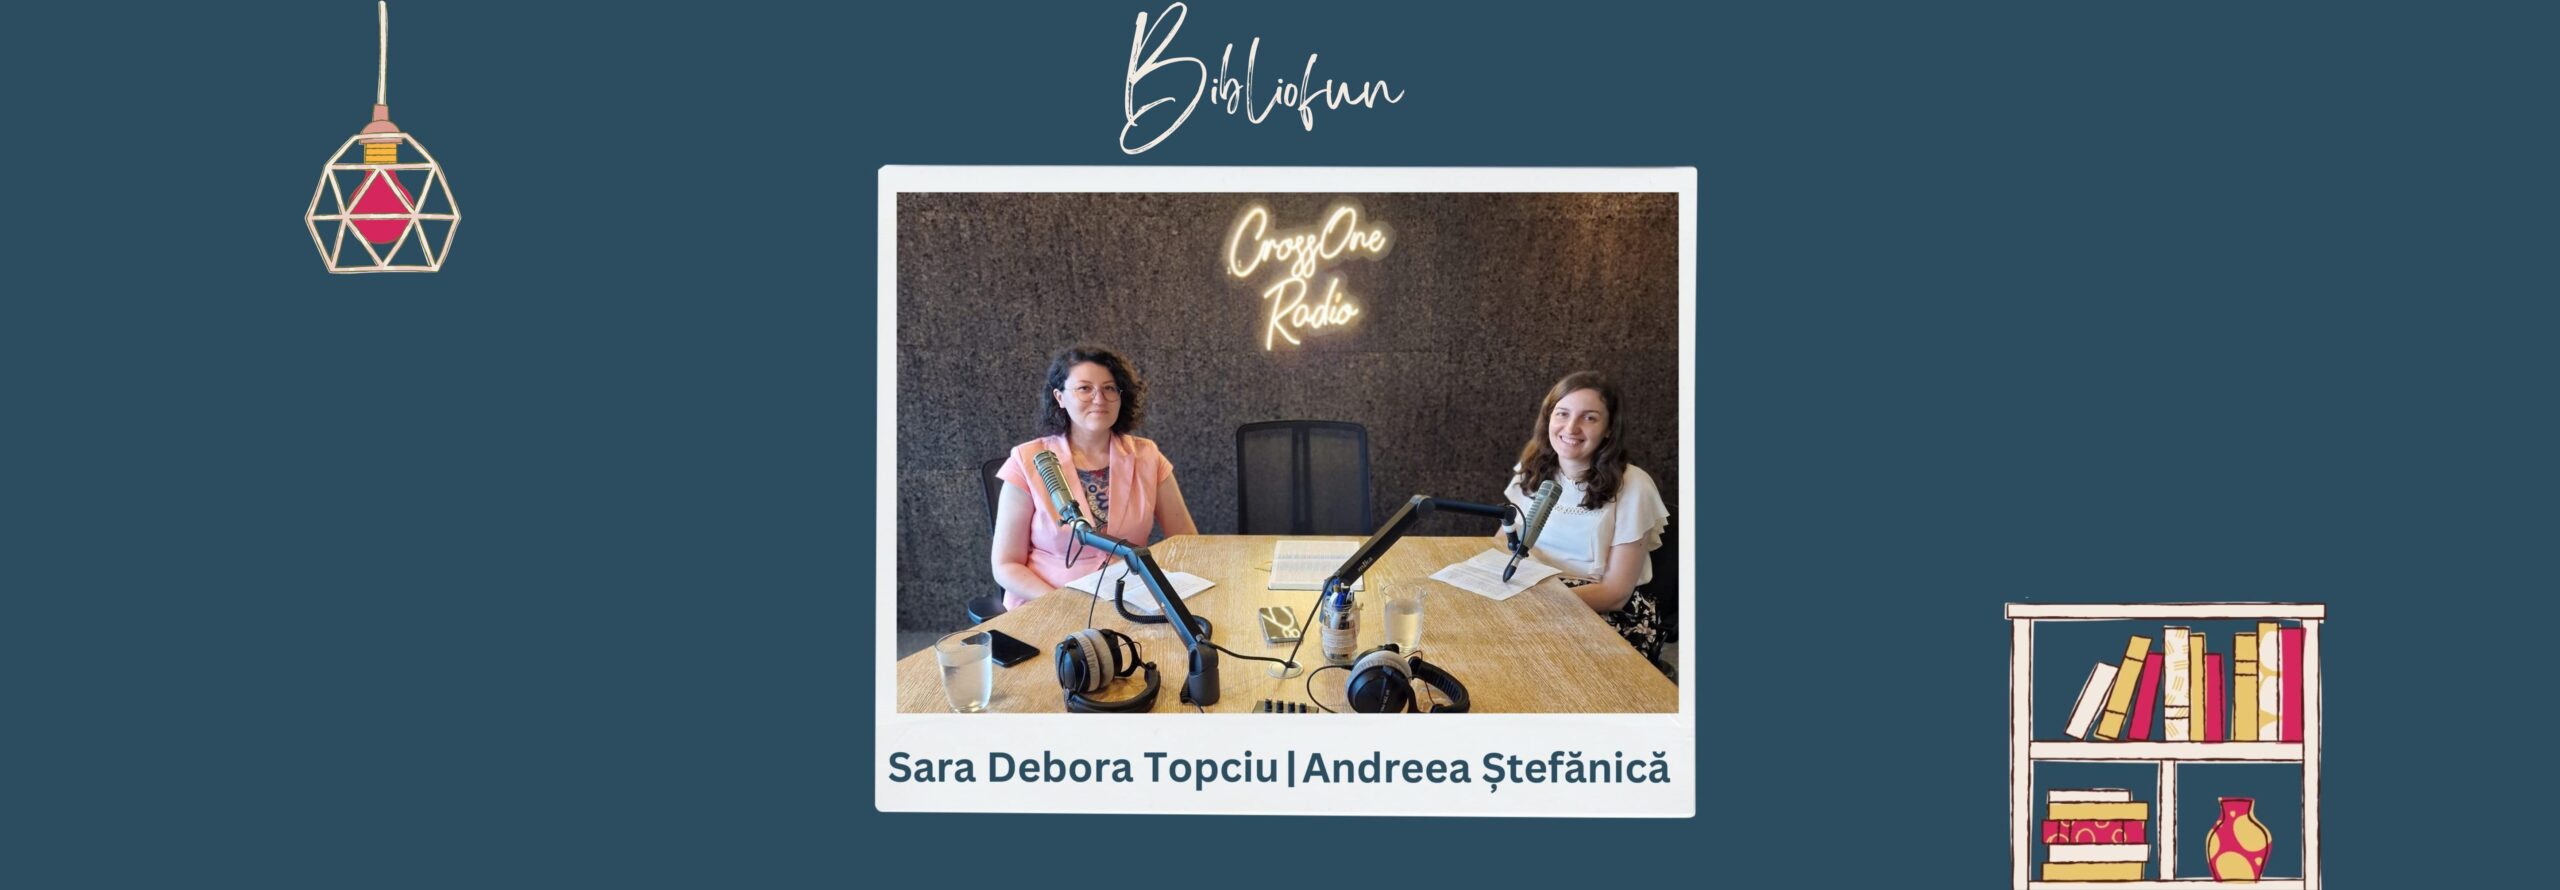 Interviu cu Sara Debora Topciu